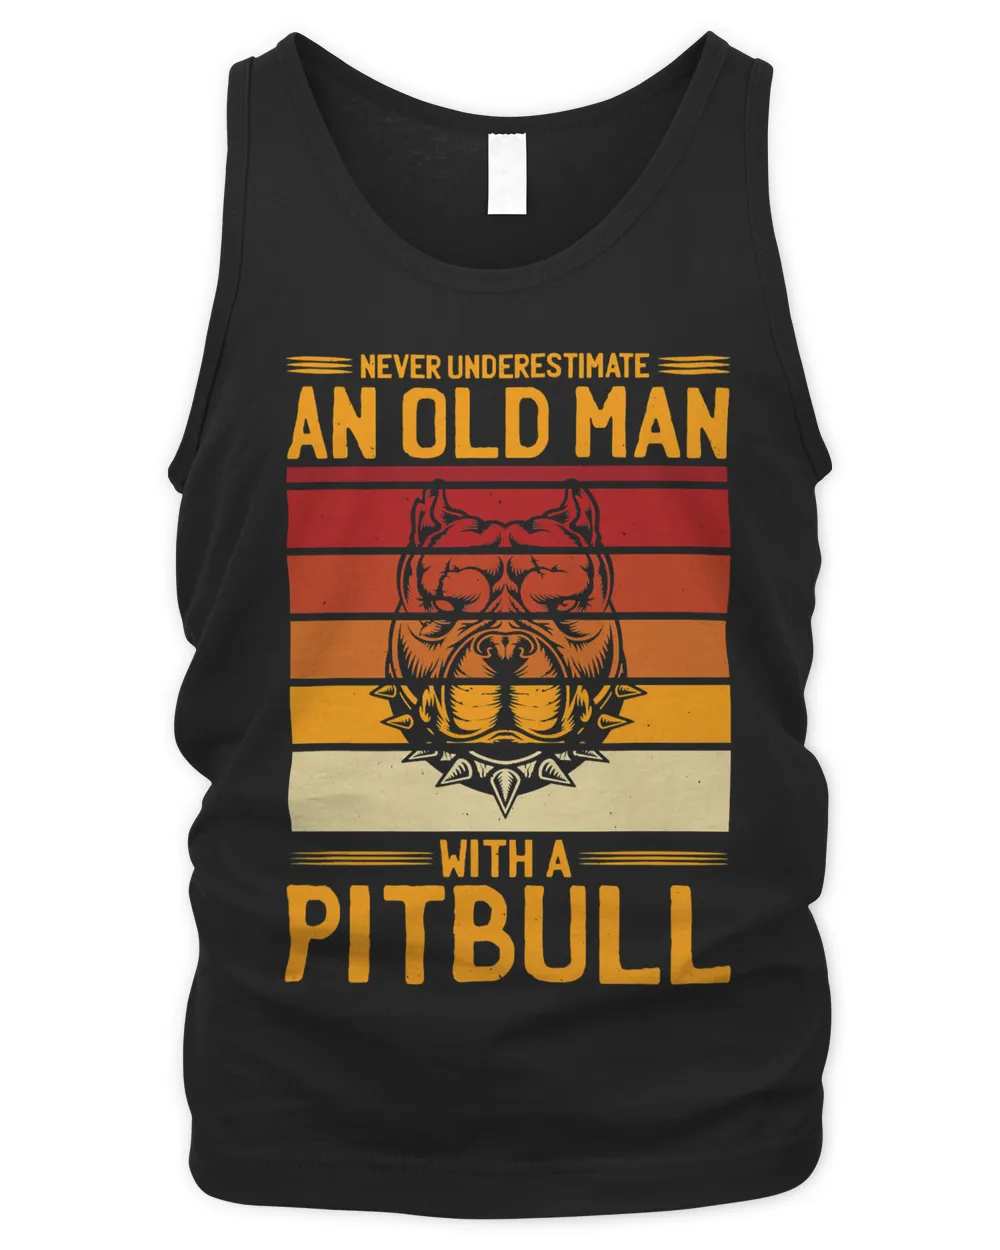 Pitbull Lover Dog Never Underestimate An Old Man With an Pitbull Pitbull Hund 402 Pitbulls